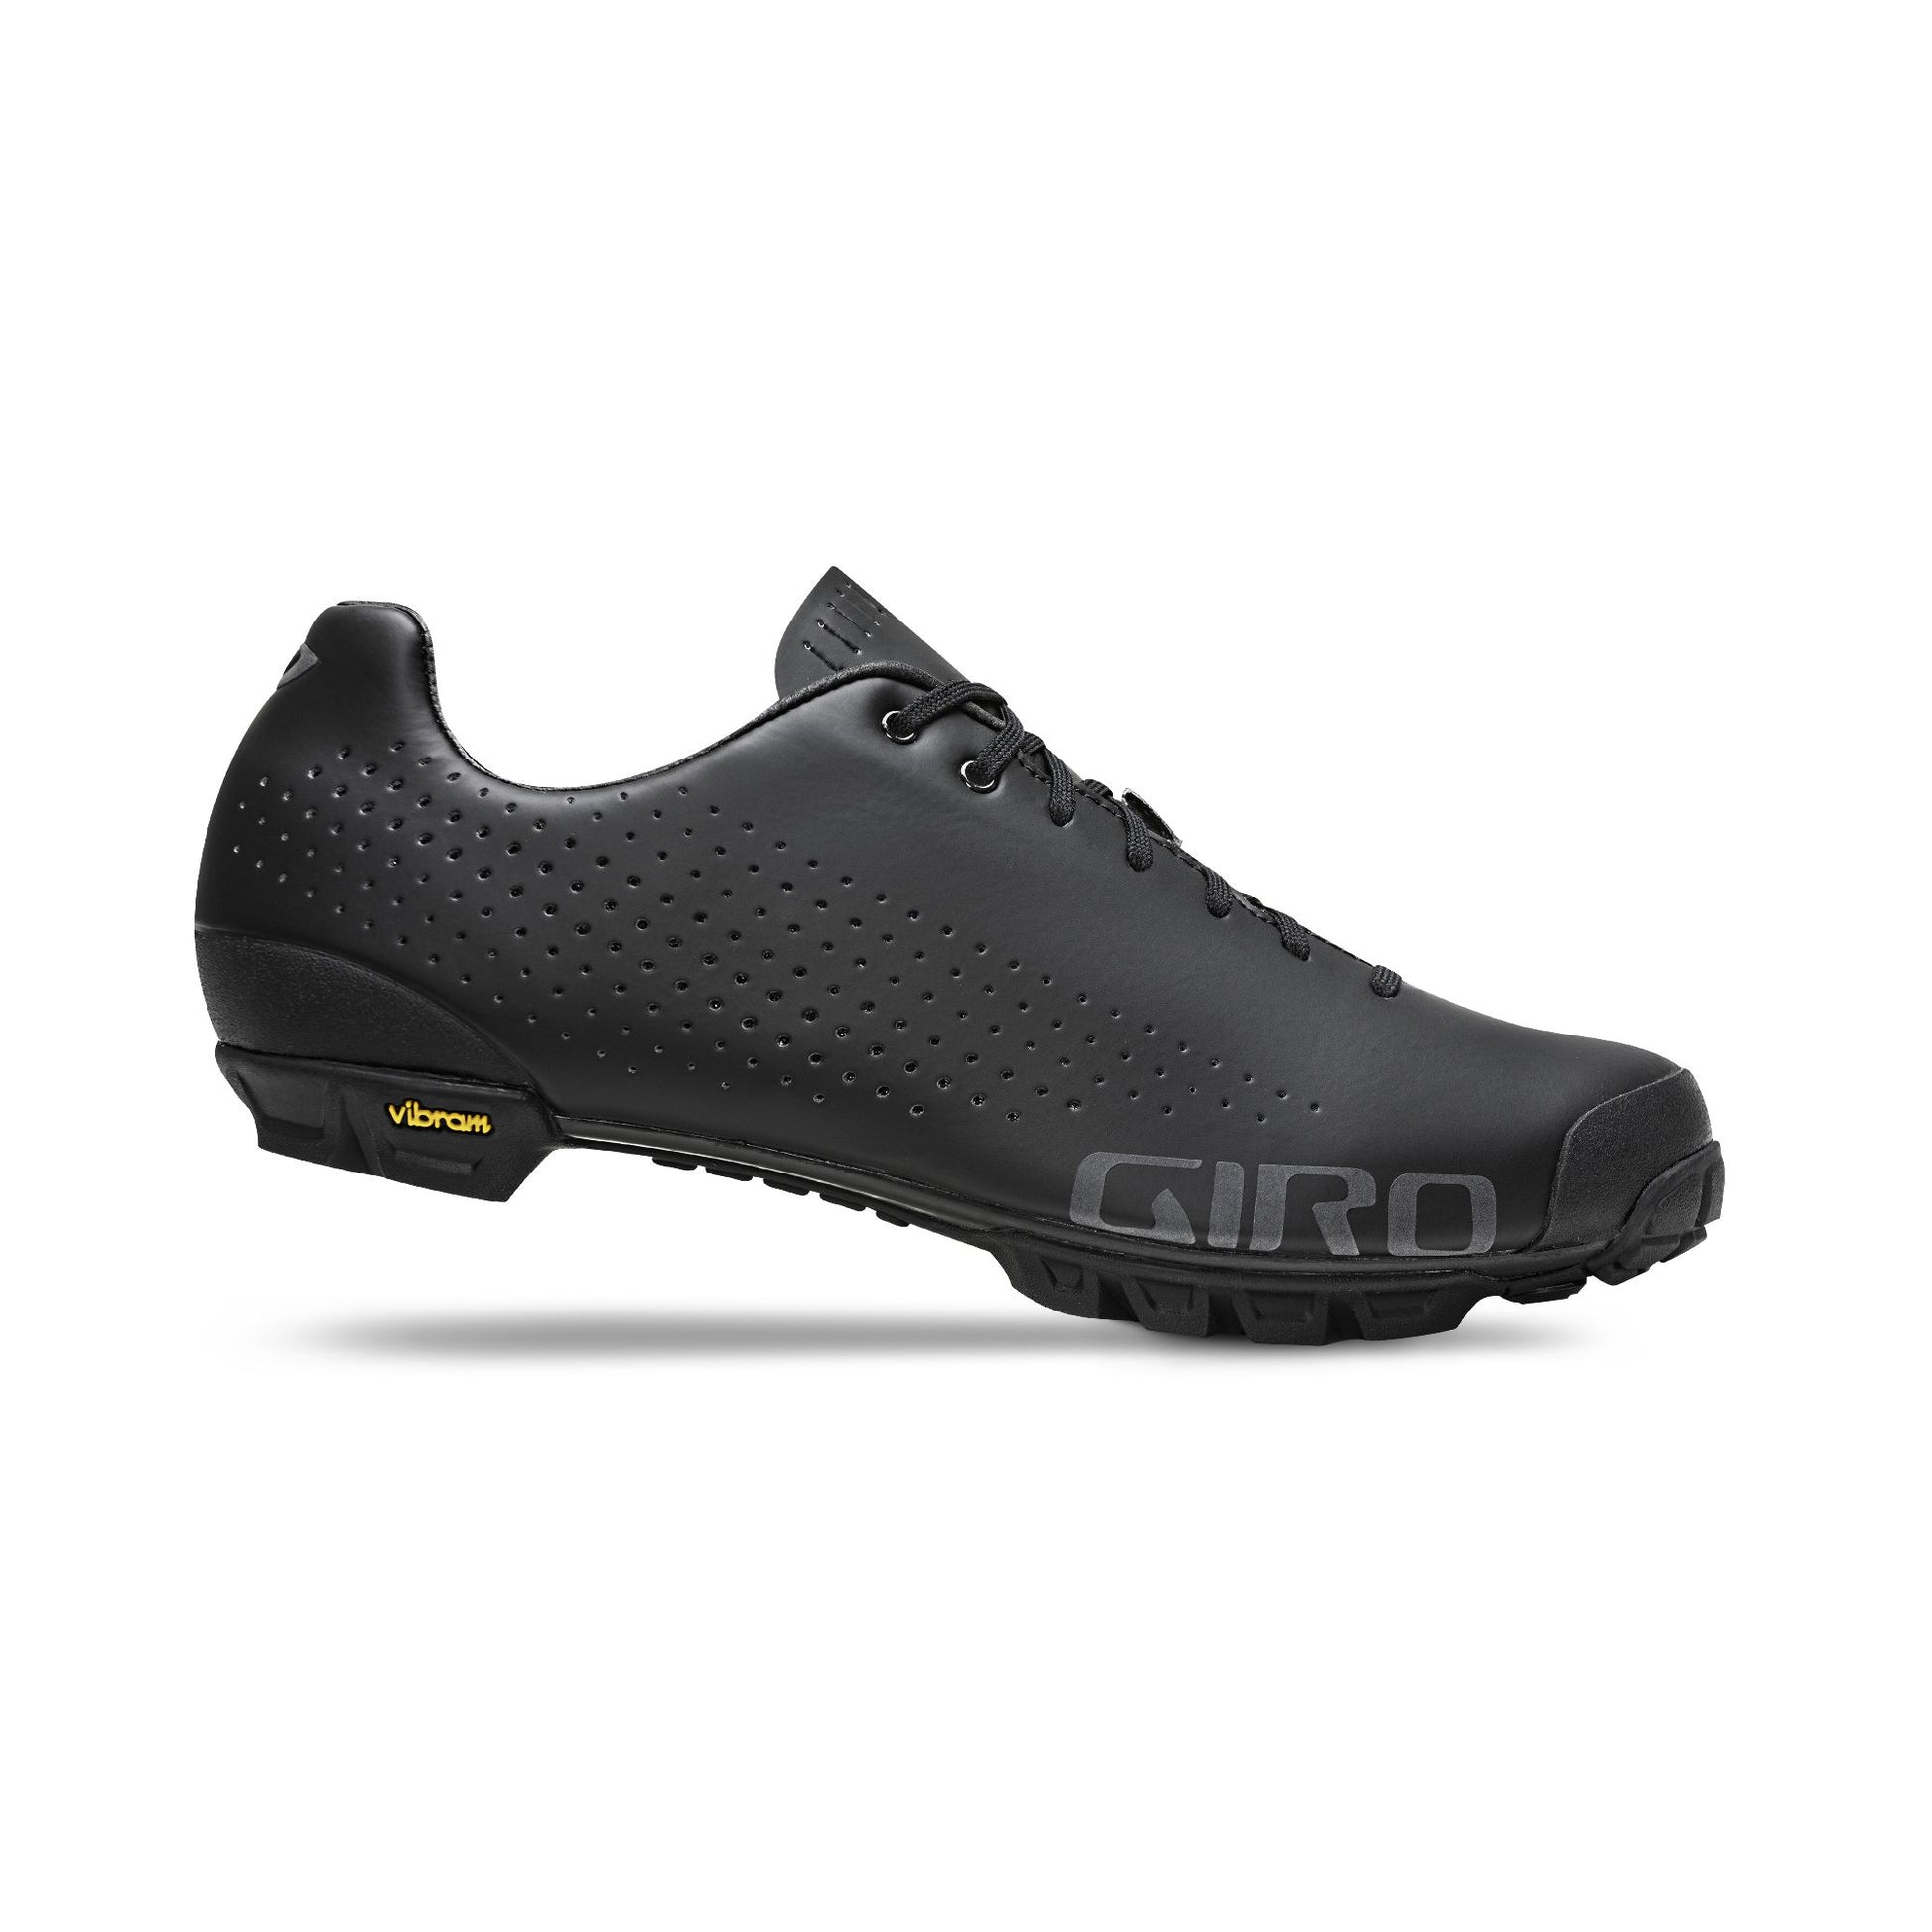 Giro Empire VR90 Shoe Black Bike Shoes